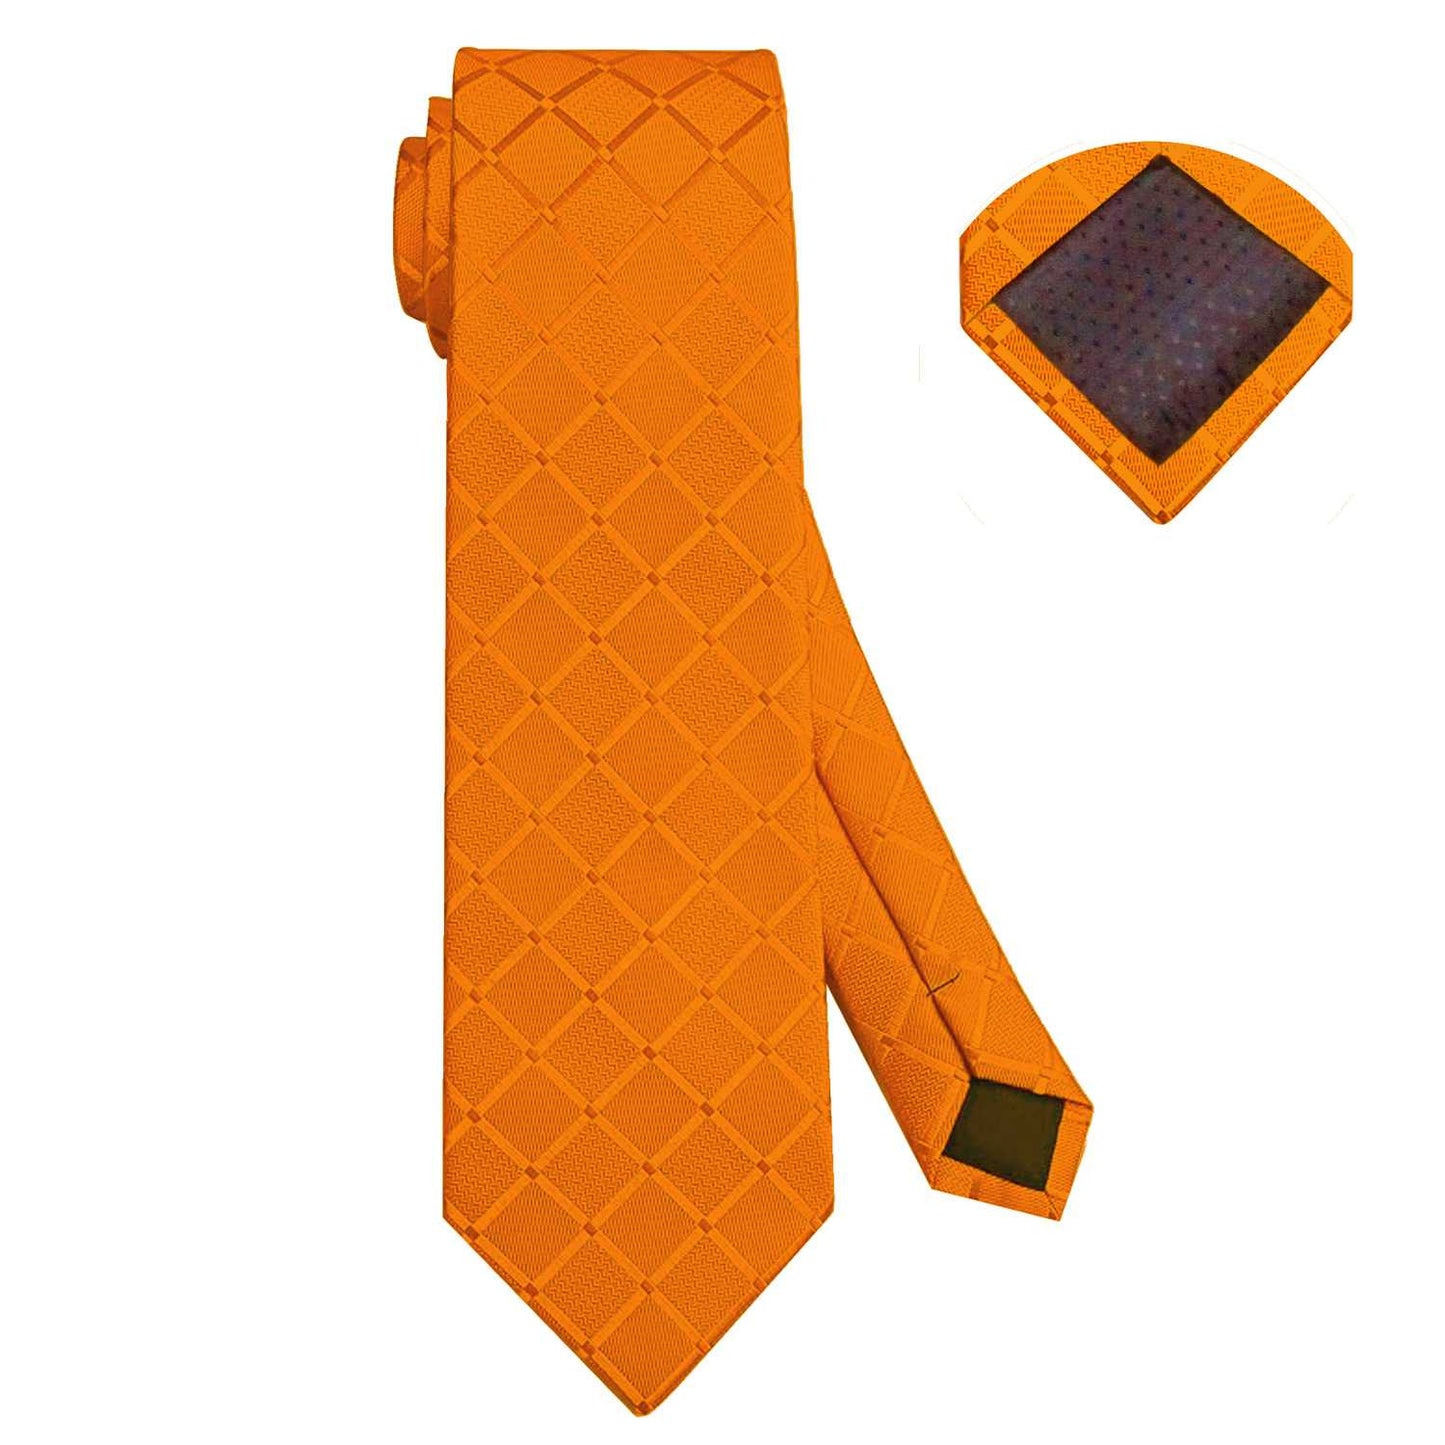 Corbata para Hombre, Conjunto de Corbata y Pañuelo de bolsillo, a Cuadros, Color Naranja, Hecha a mano, Elegante